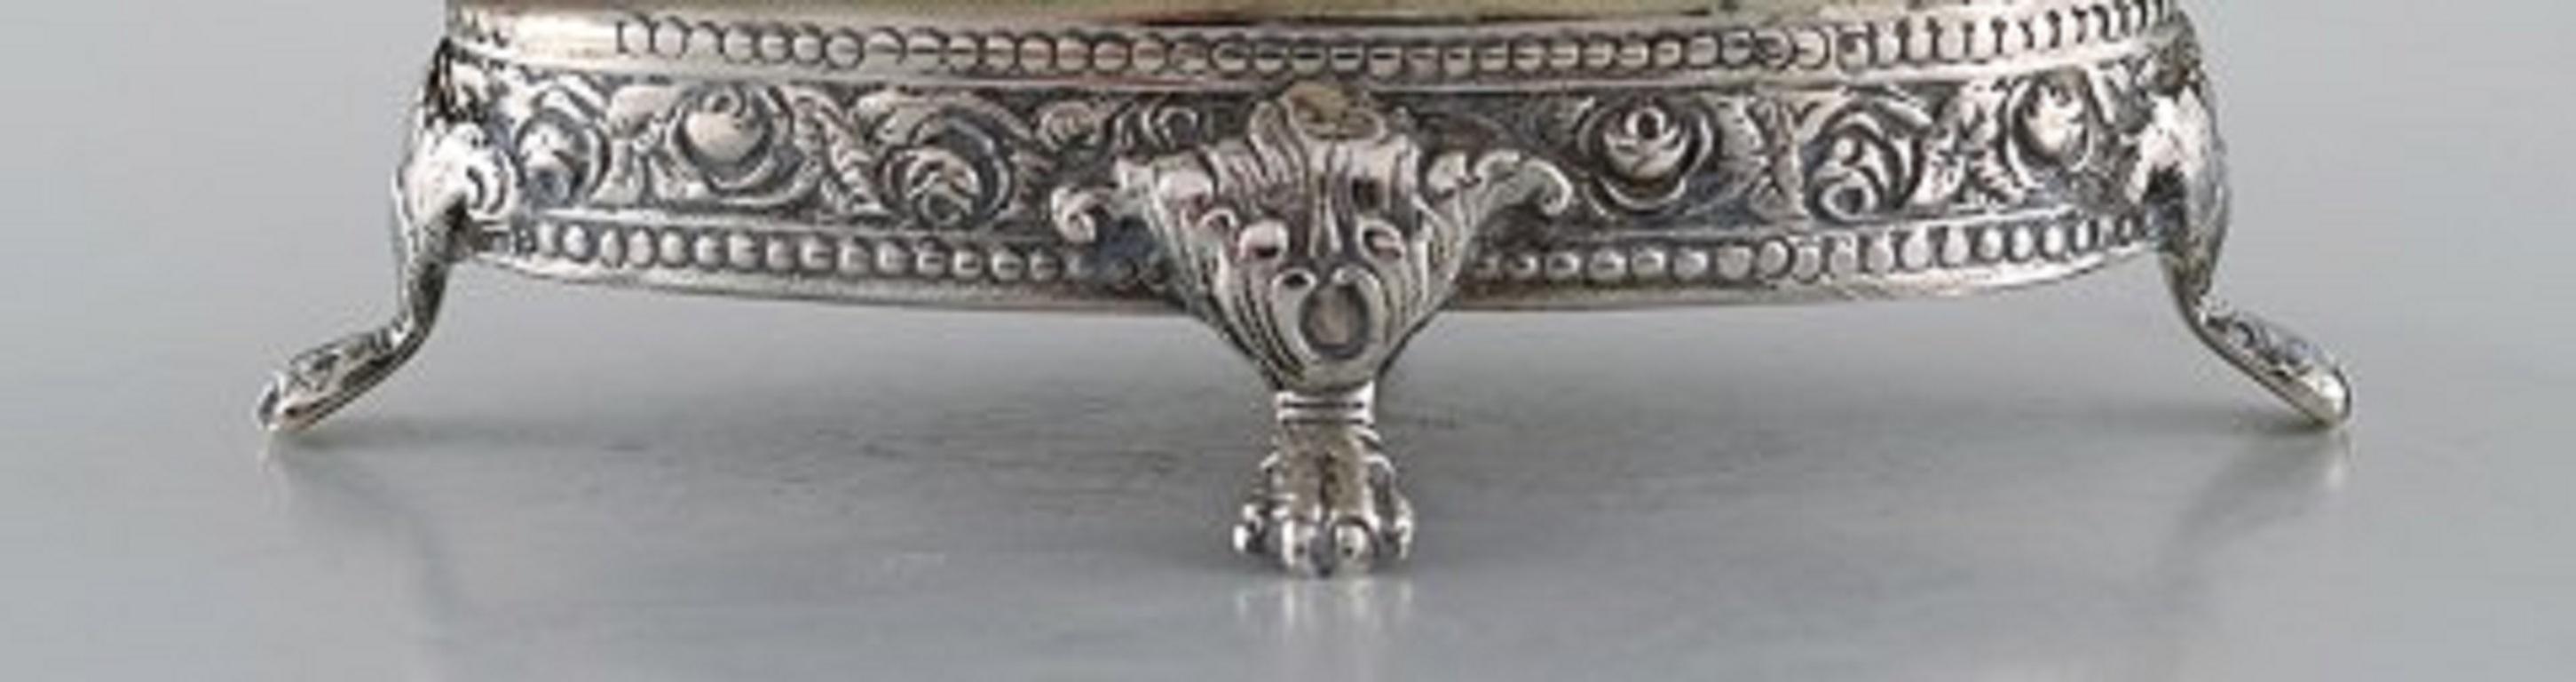 European Silversmith, Ornamental Silver Bowl on Feet, circa 1900 In Good Condition For Sale In Copenhagen, DK